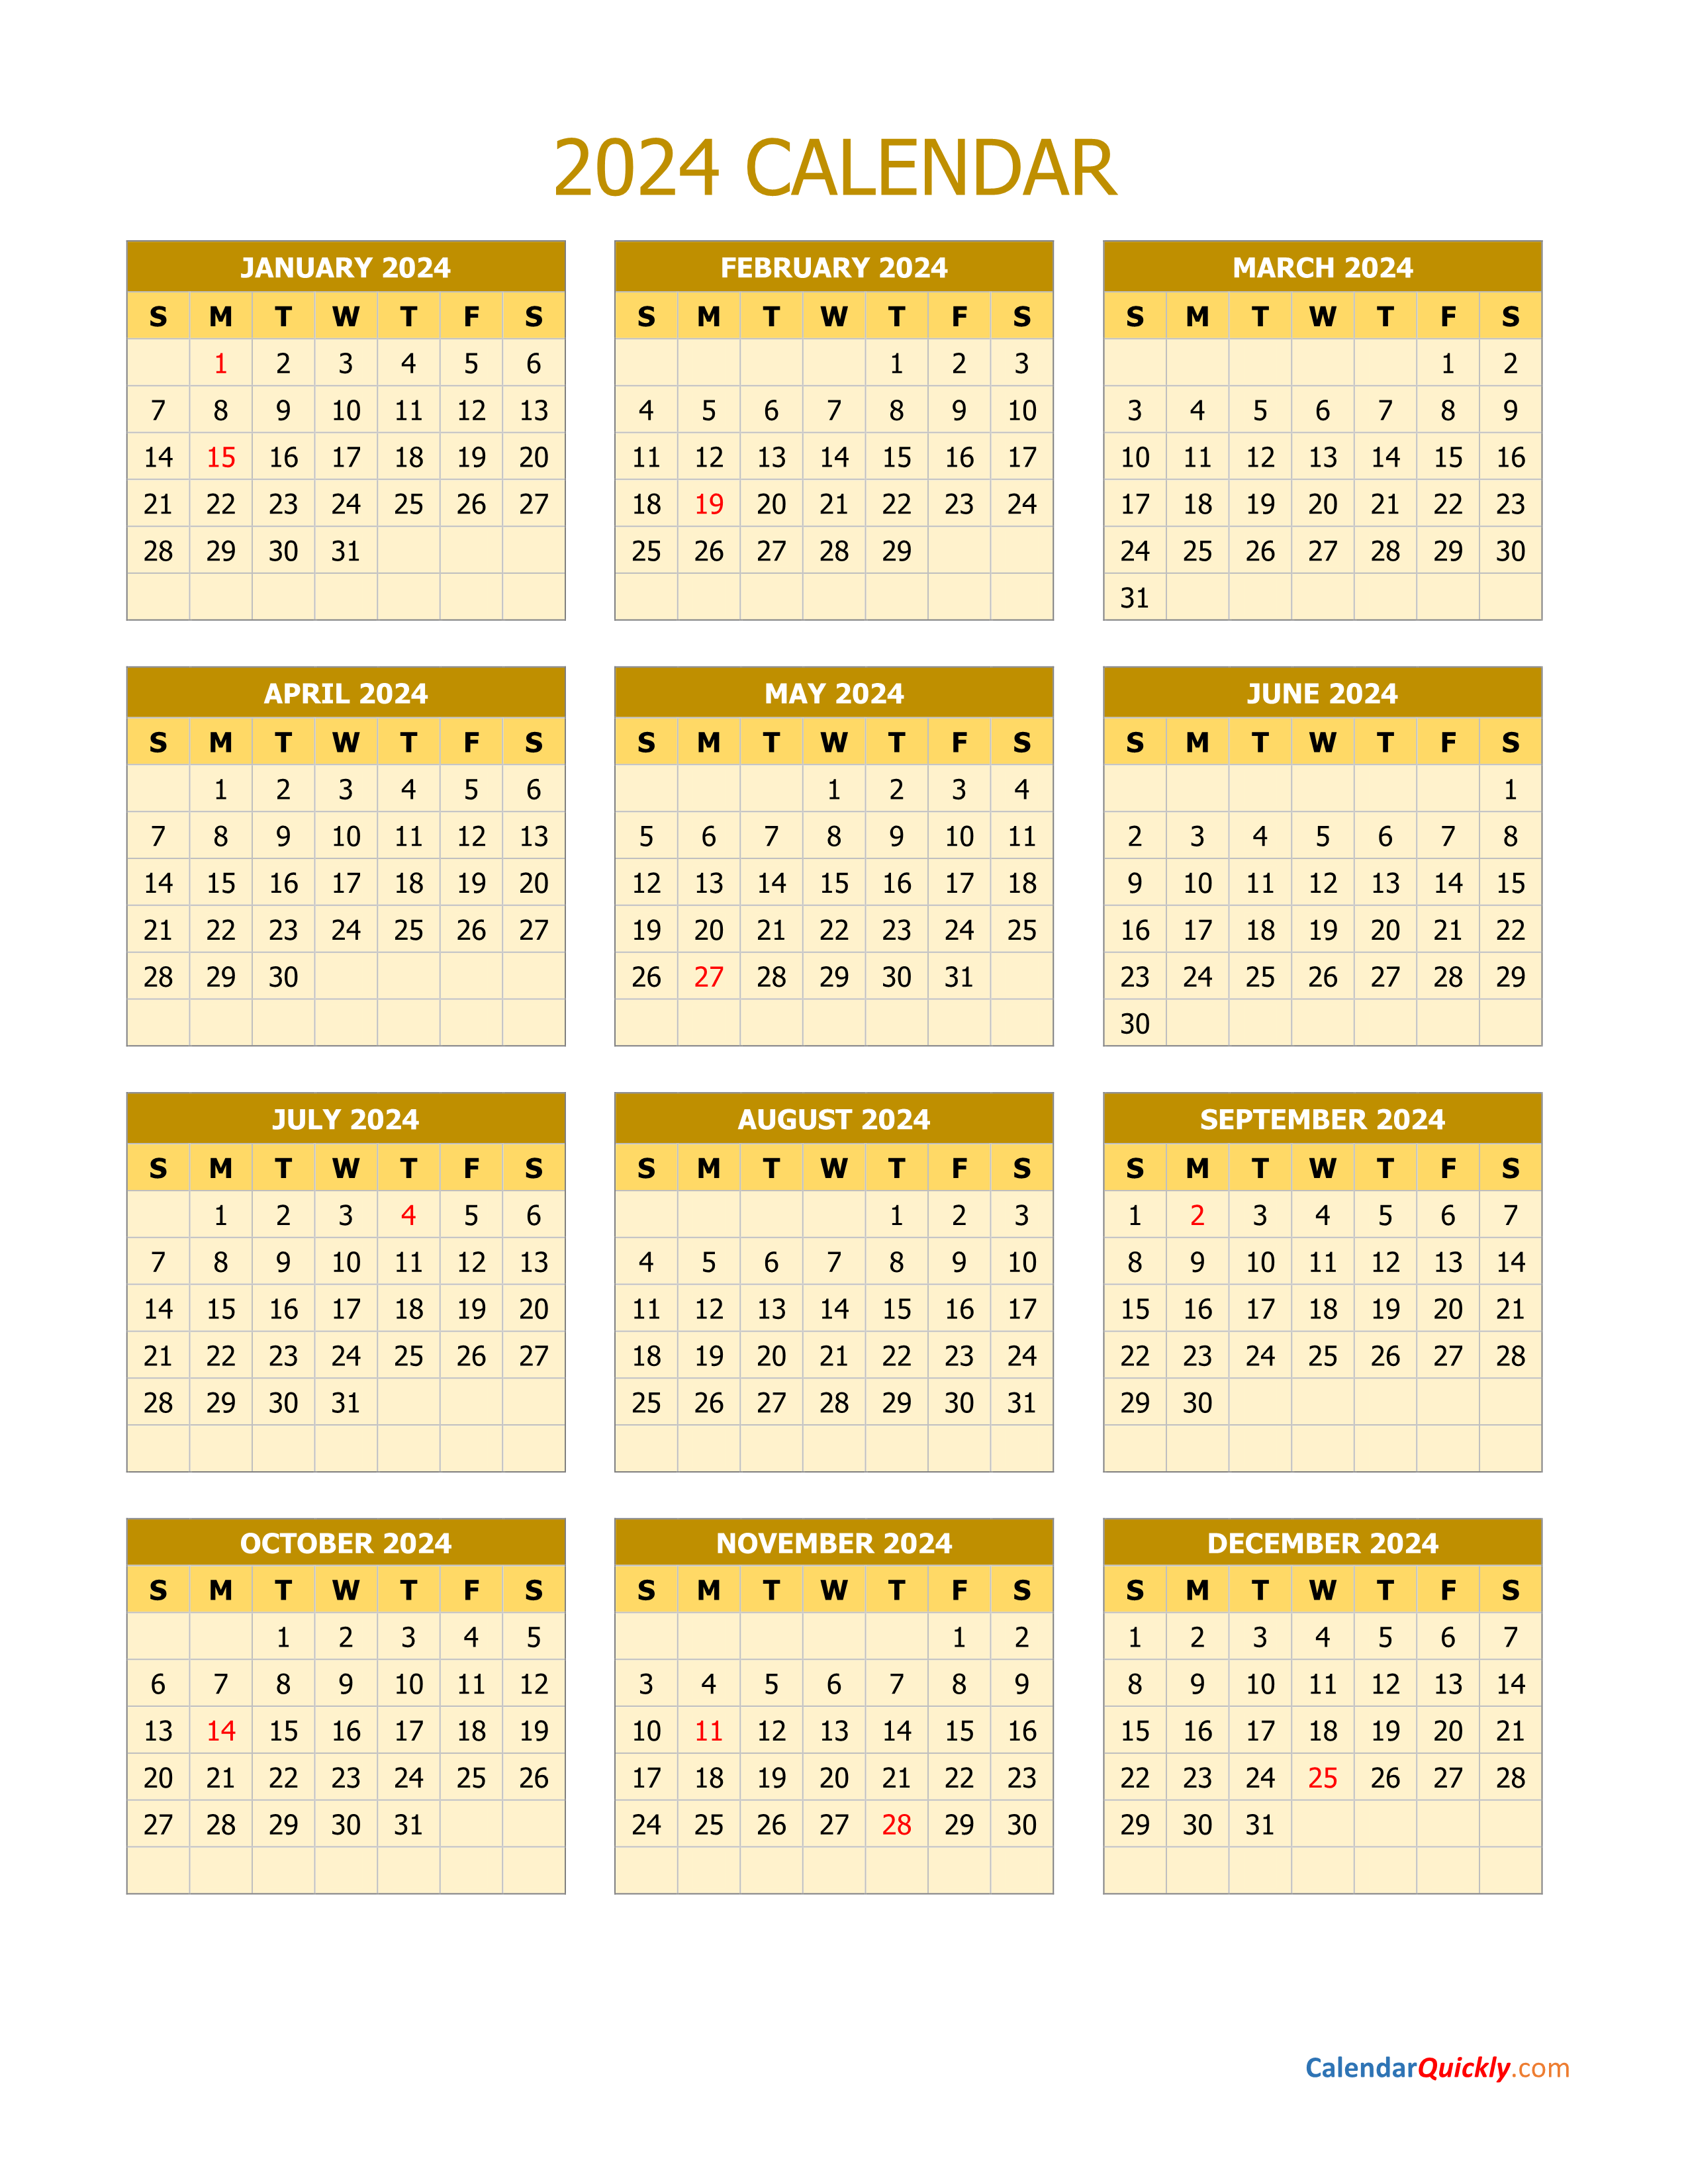 2024 Calendar Vertical Calendar Quickly - Free Printable 2024 Desk Calendar By Month